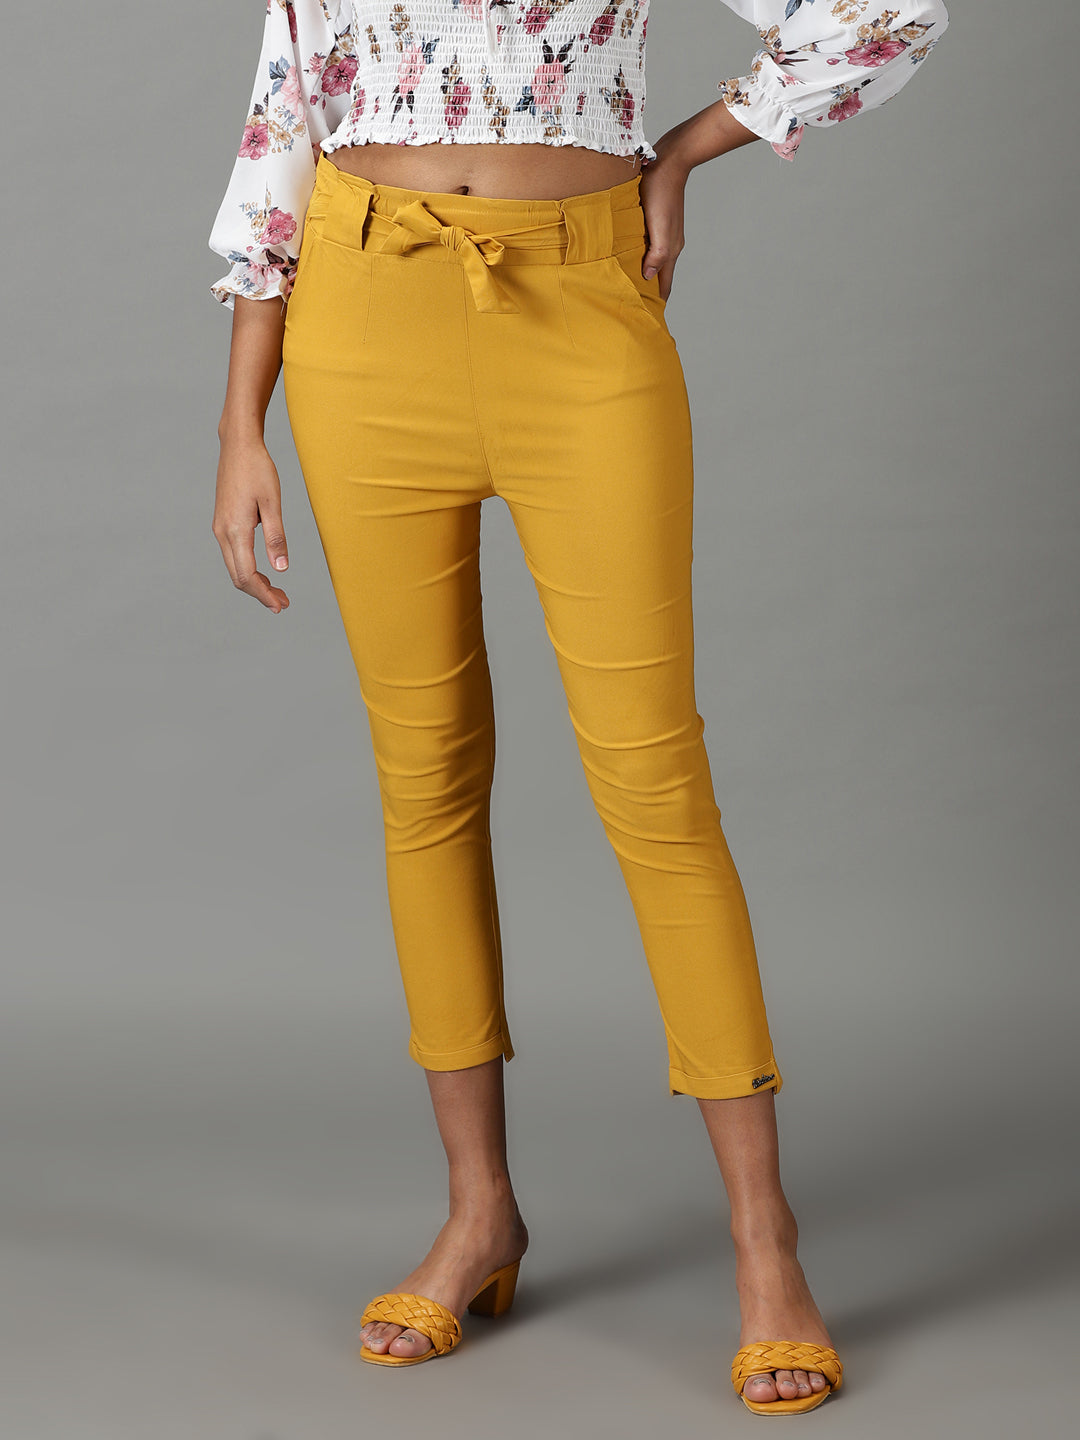 Women's Mustard Solid Cigarette Trouser